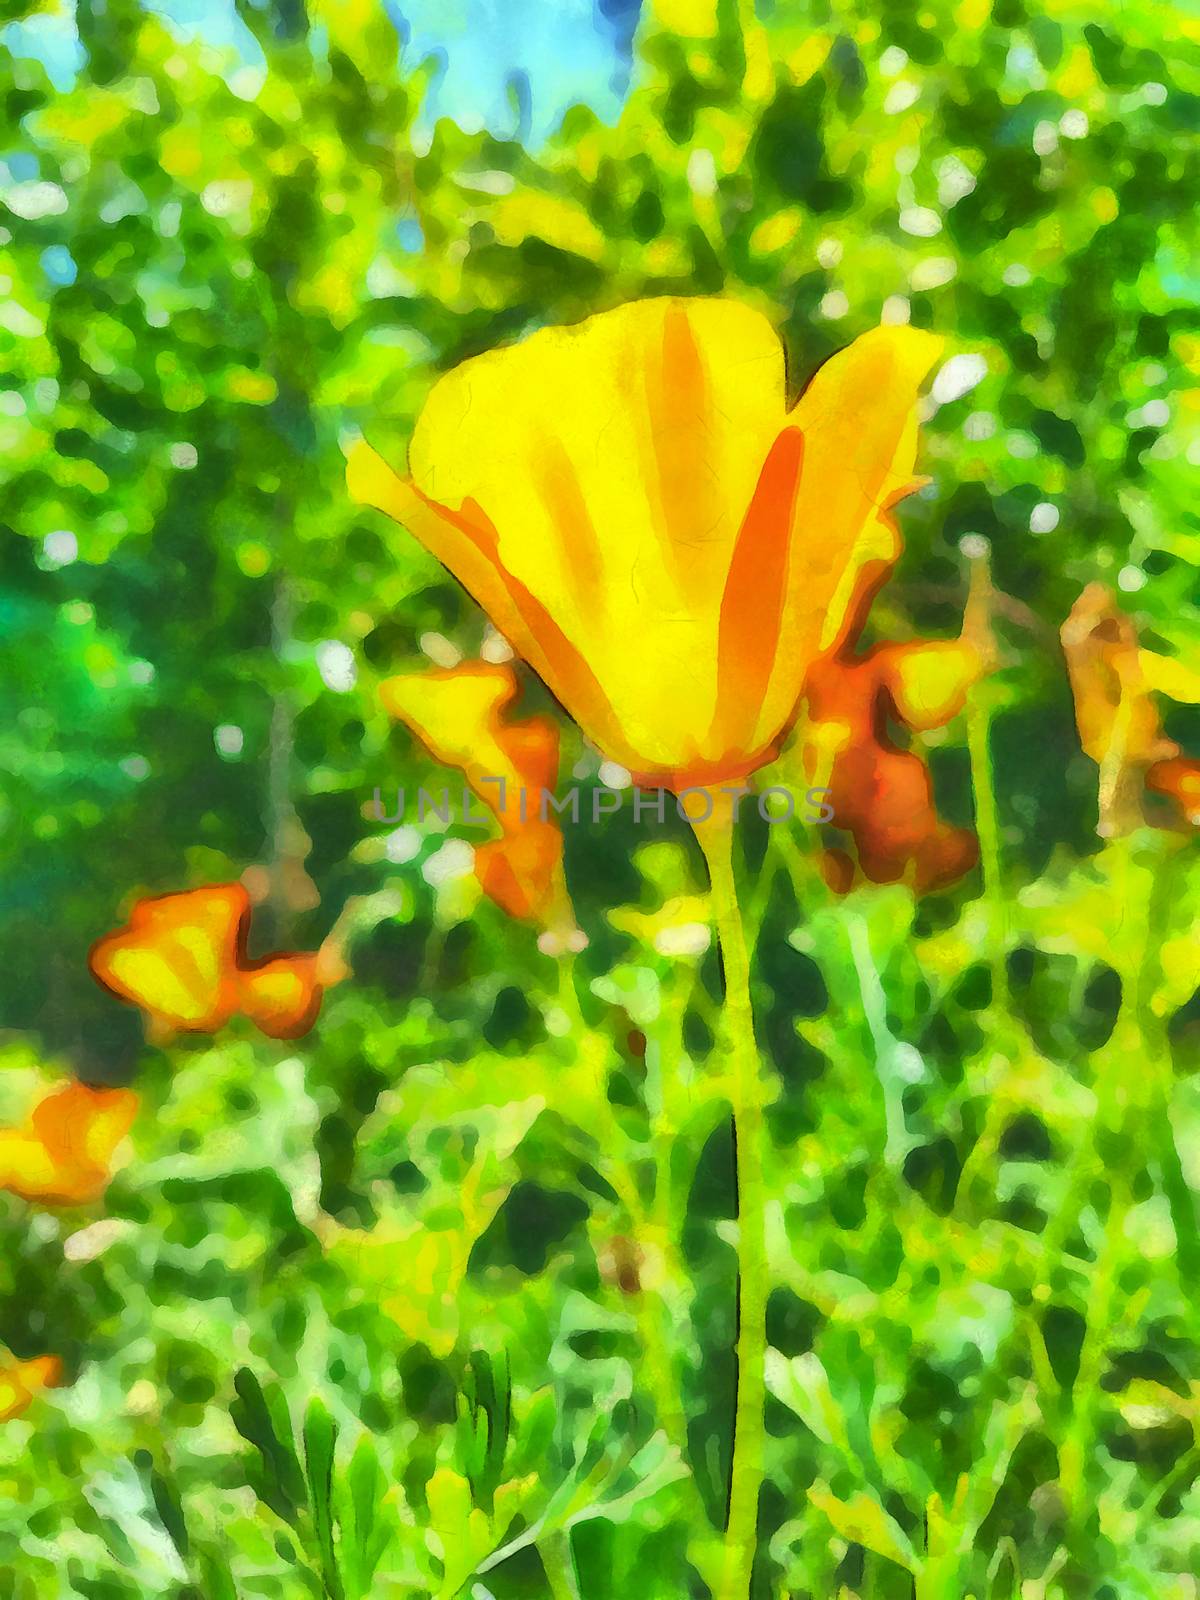 California Poppies by whitechild